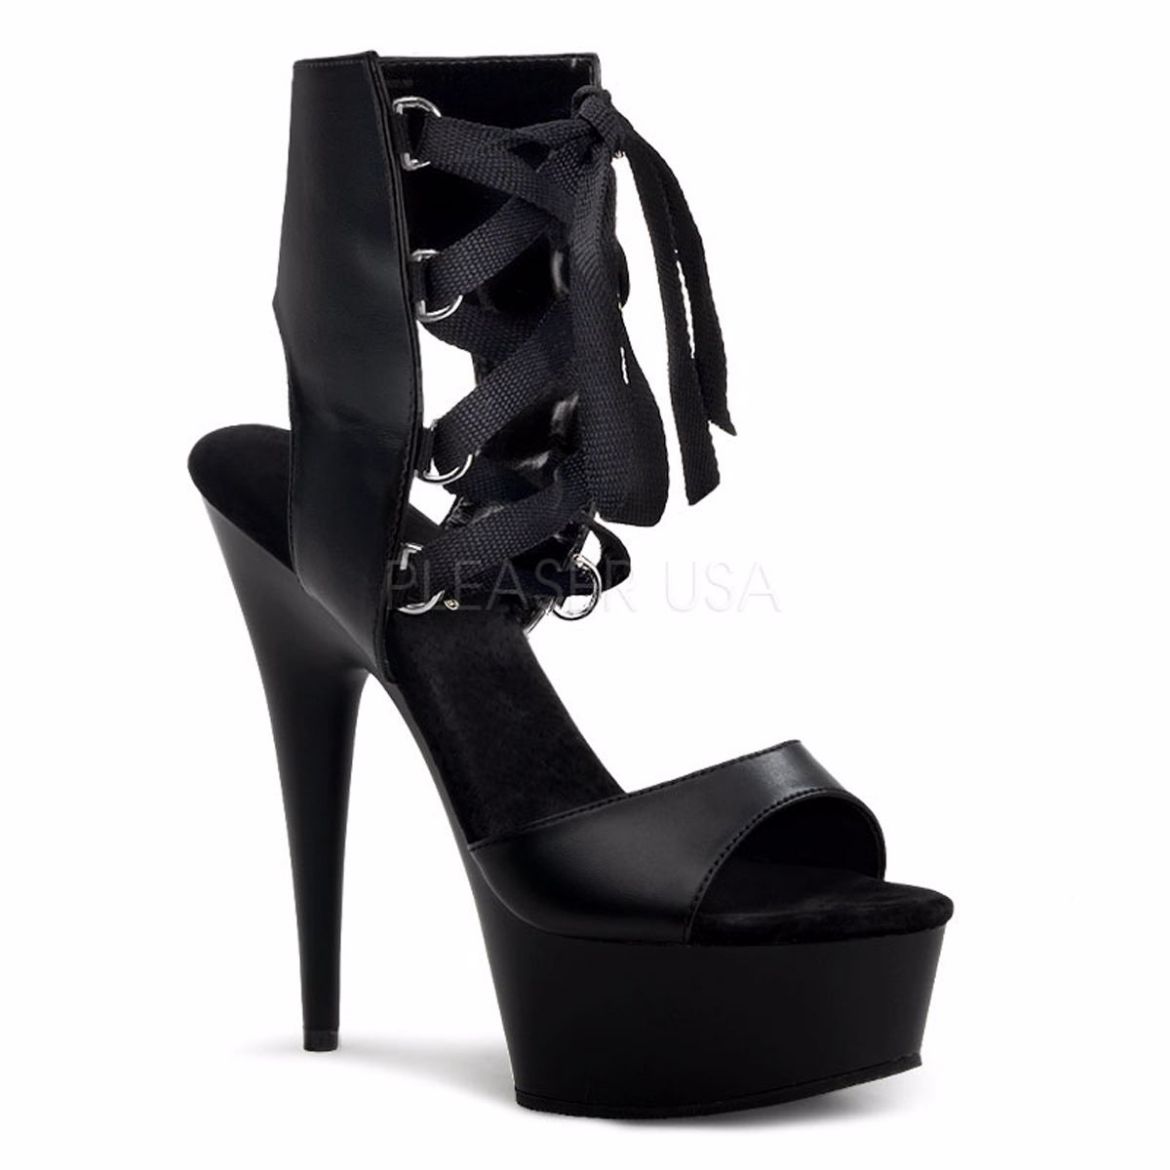 Product image of Pleaser Delight-600-14 Black Faux Leather/ Black, 6 inch (15.2 cm) Heel, 1 3/4 inch (4.4 cm) Platform Sandal Shoes